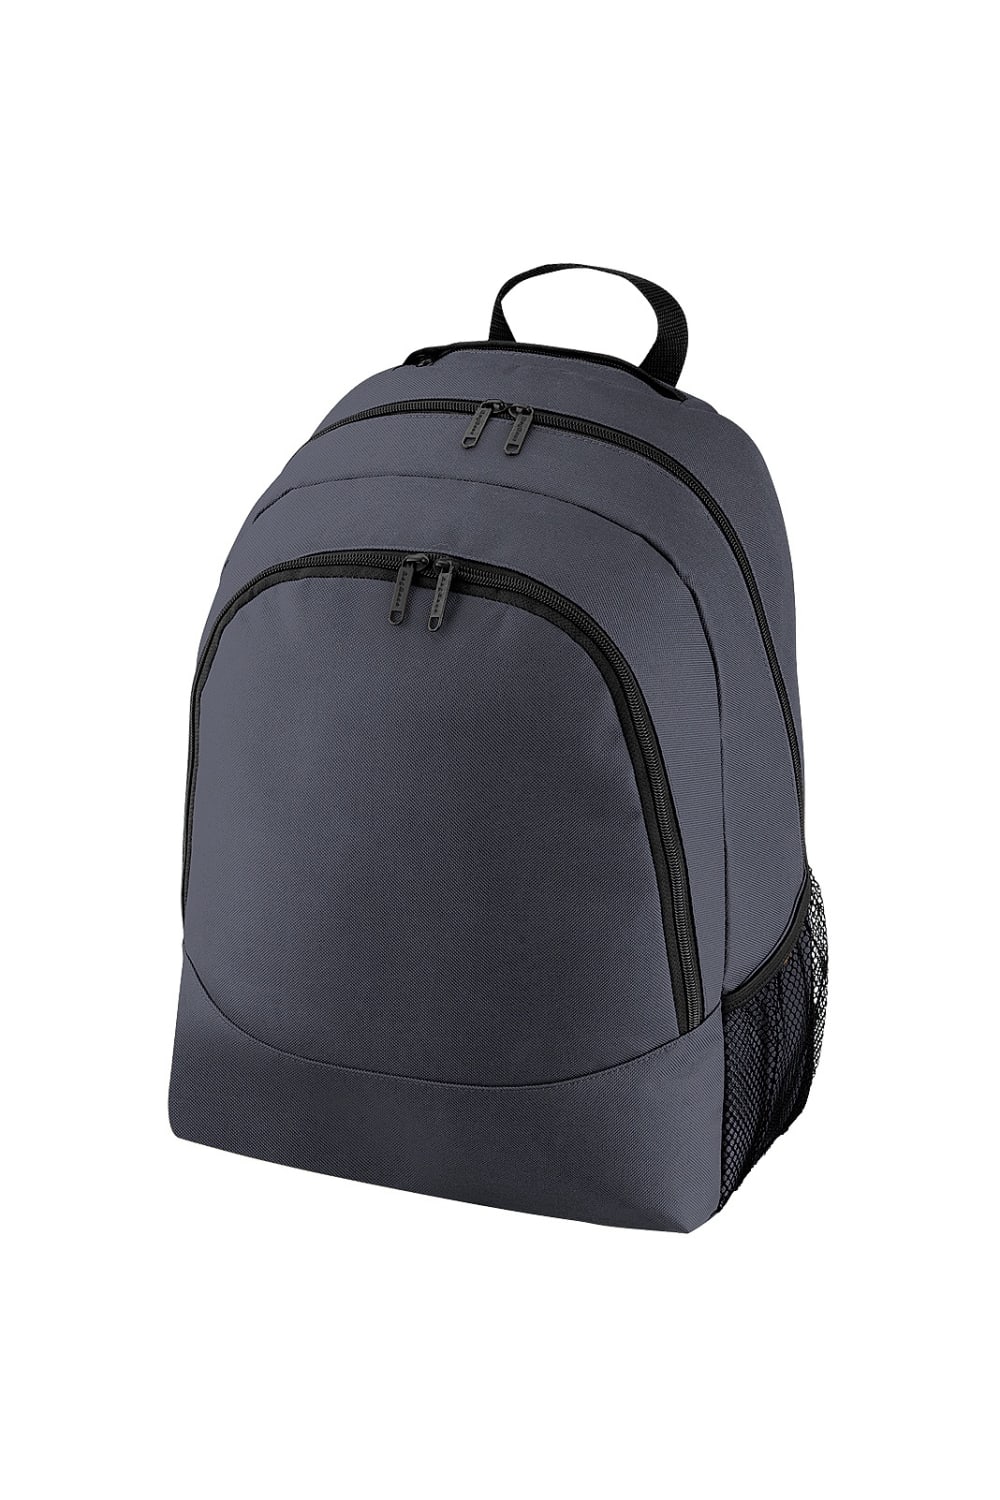 Universal Multipurpose Backpack / Rucksack / Bag (18 Litres) (Graphite)